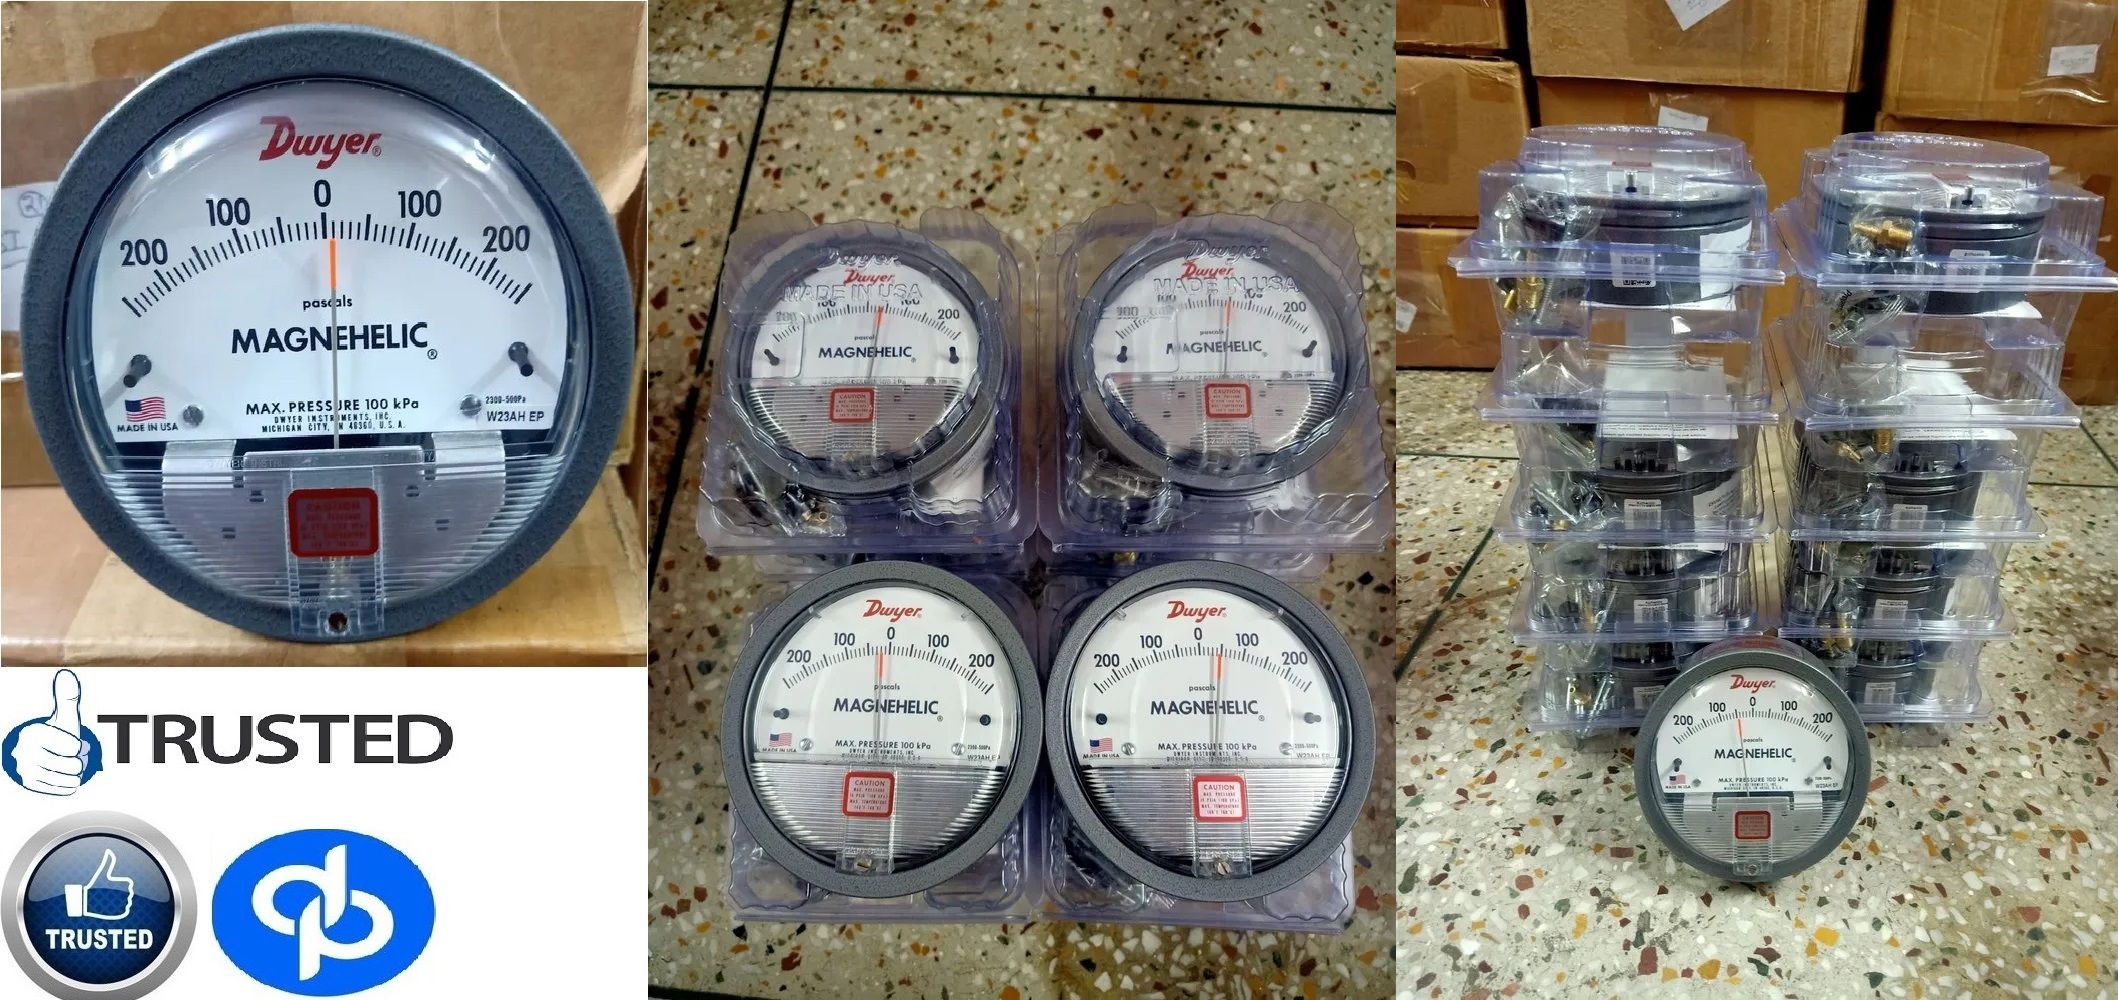 Dwyer Maghnehic gauges by Chandrapur Maharashtra